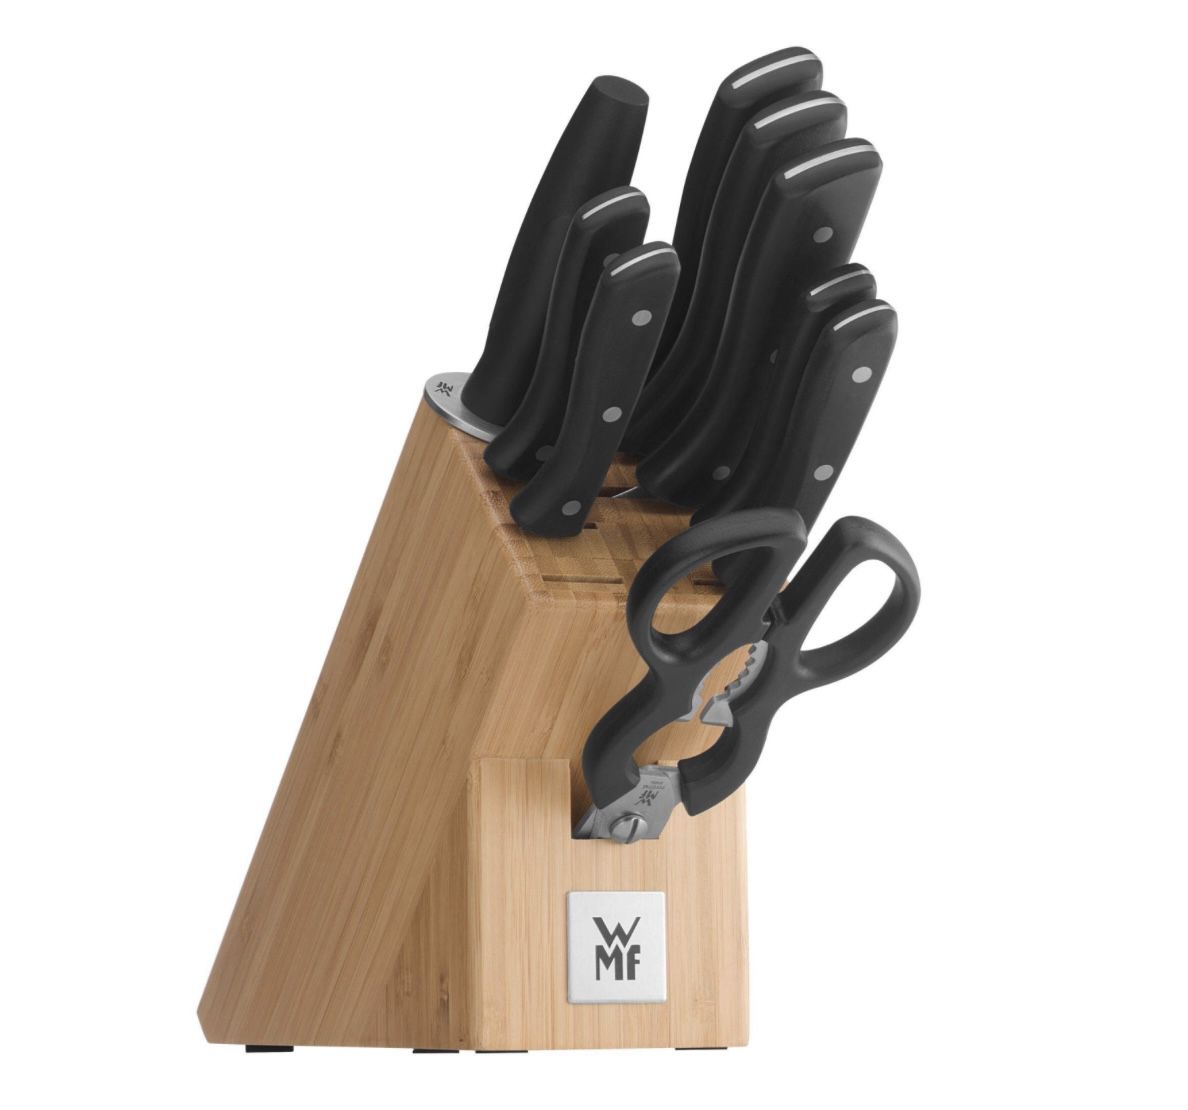 WMF Messerblock Profi Select mit 10 teiligem Messerset für 79,99€ (statt 110€)